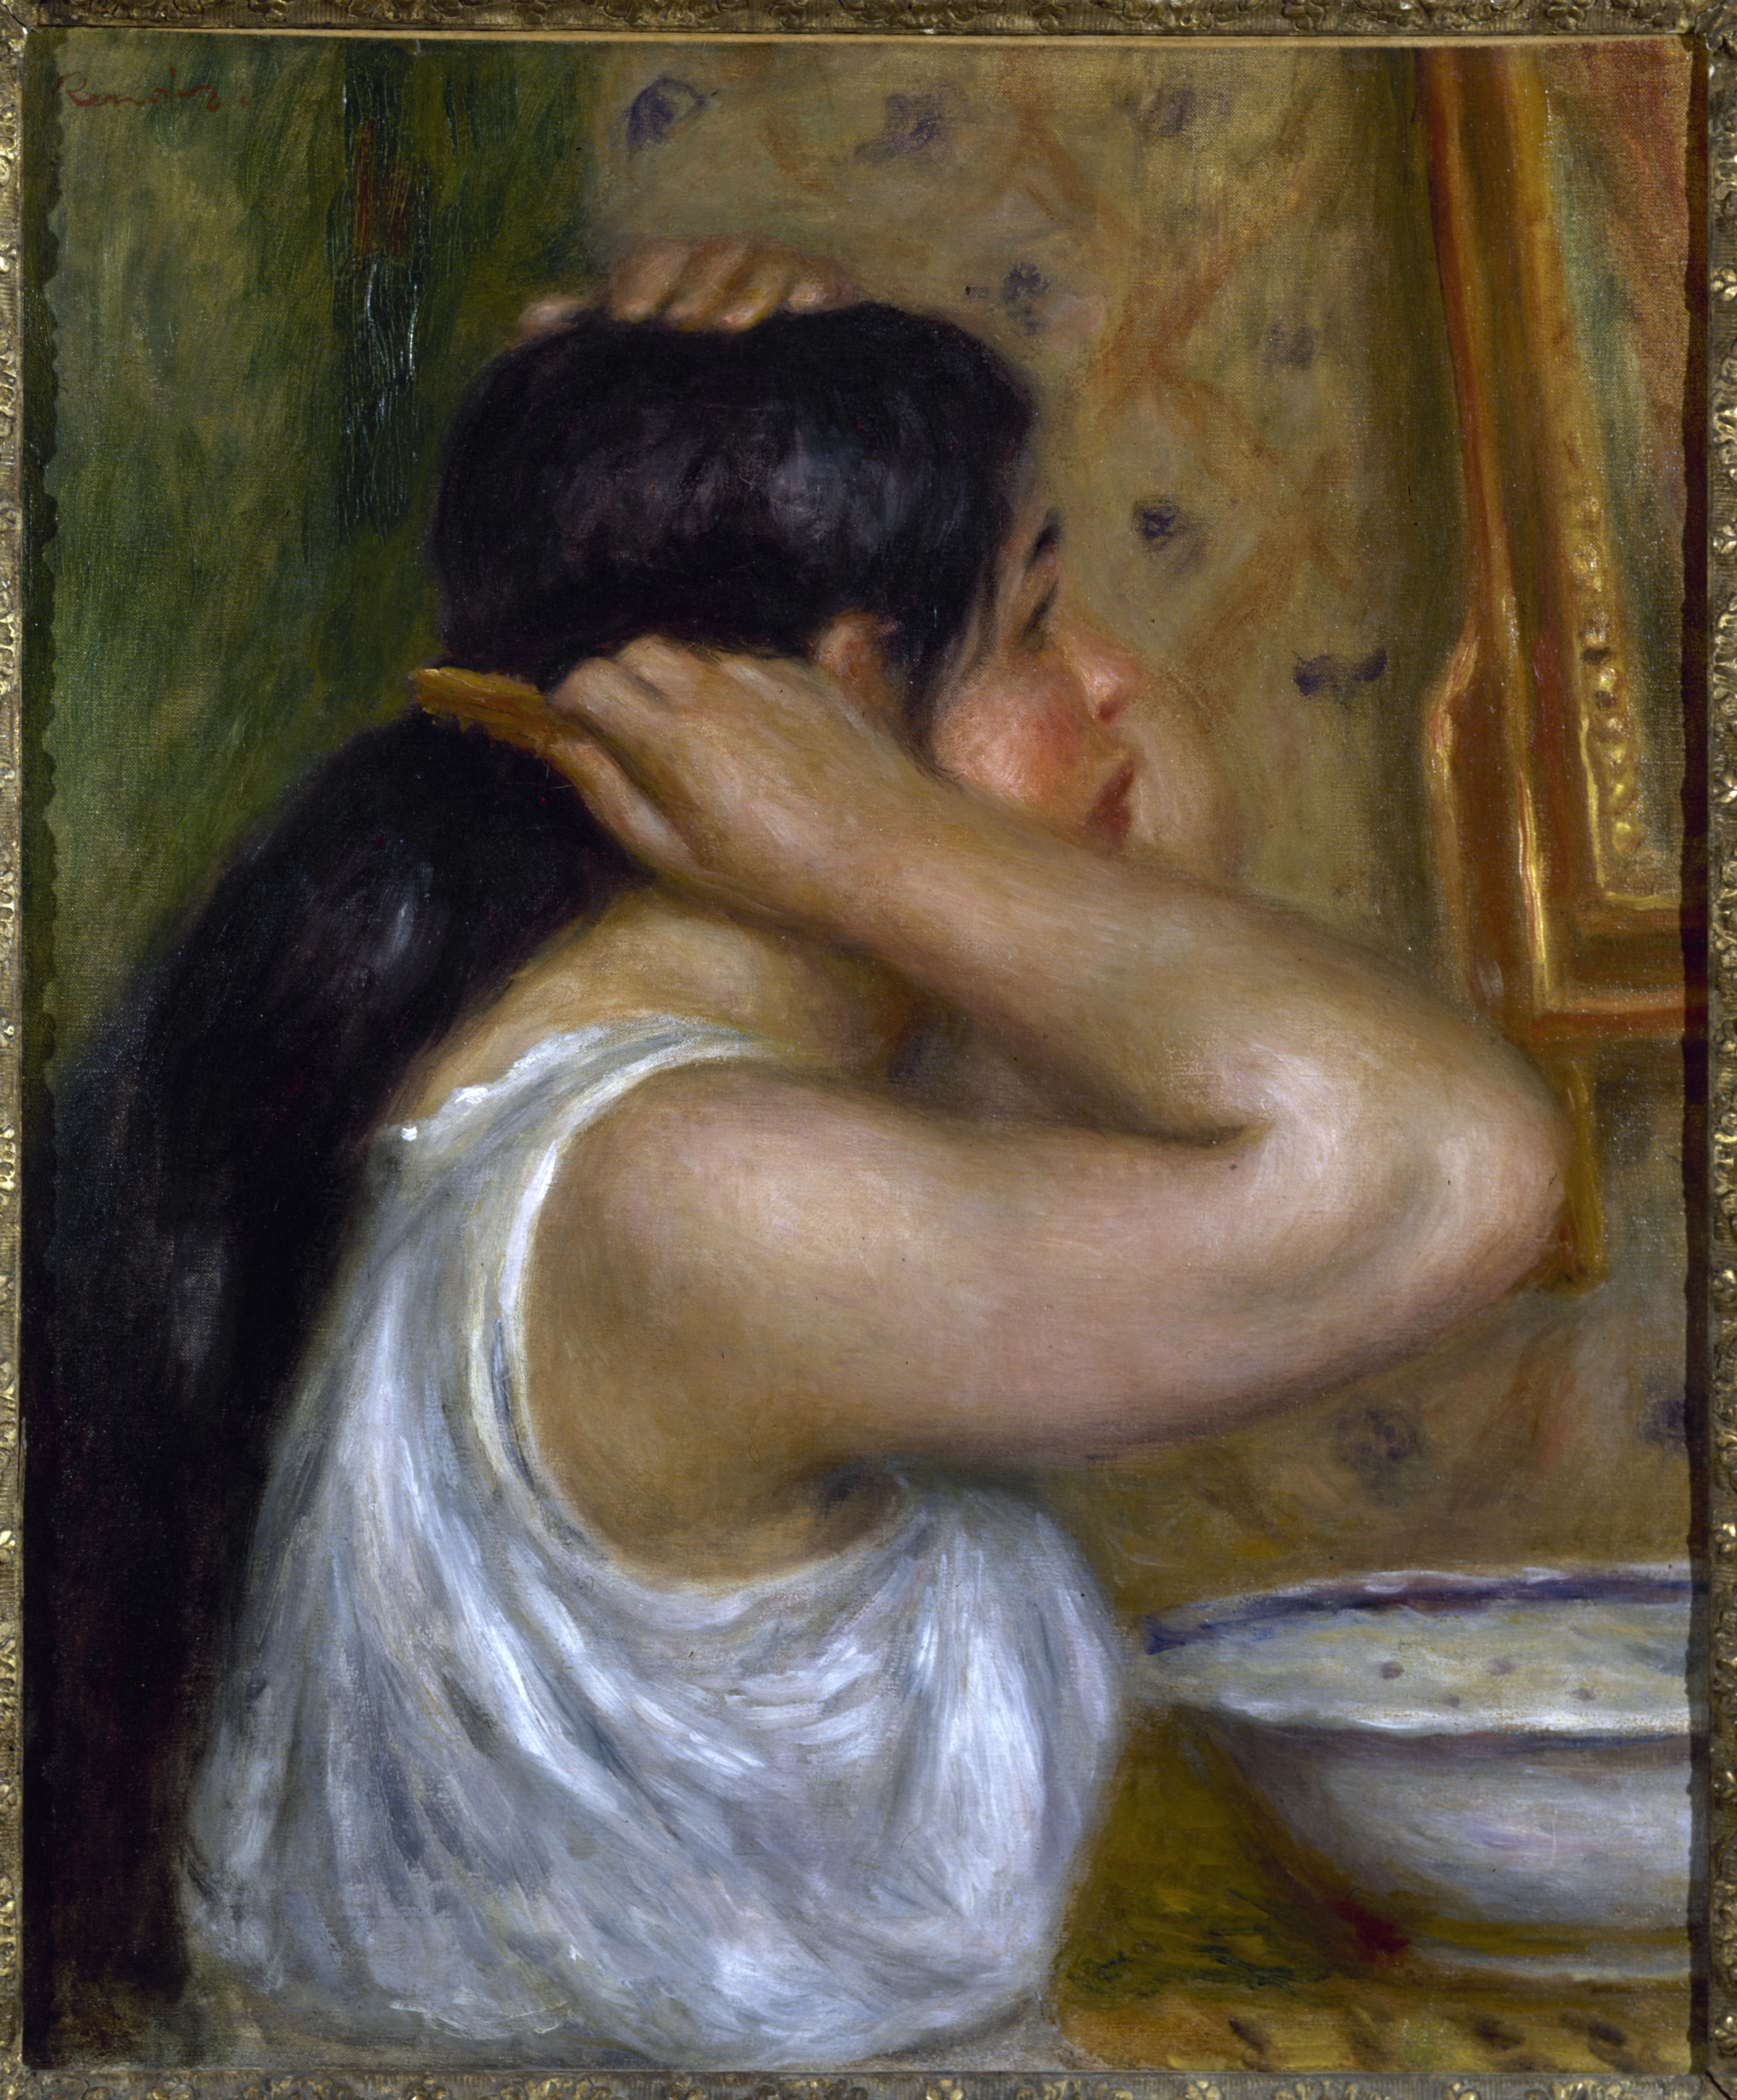 La toilette: donna che si pettina, 1907 - 1908. Olio su tela, 55 46,5 cm. Musée d'Orsay, Parigi. Credito: © Roger-Viollet/contrasto Parigi